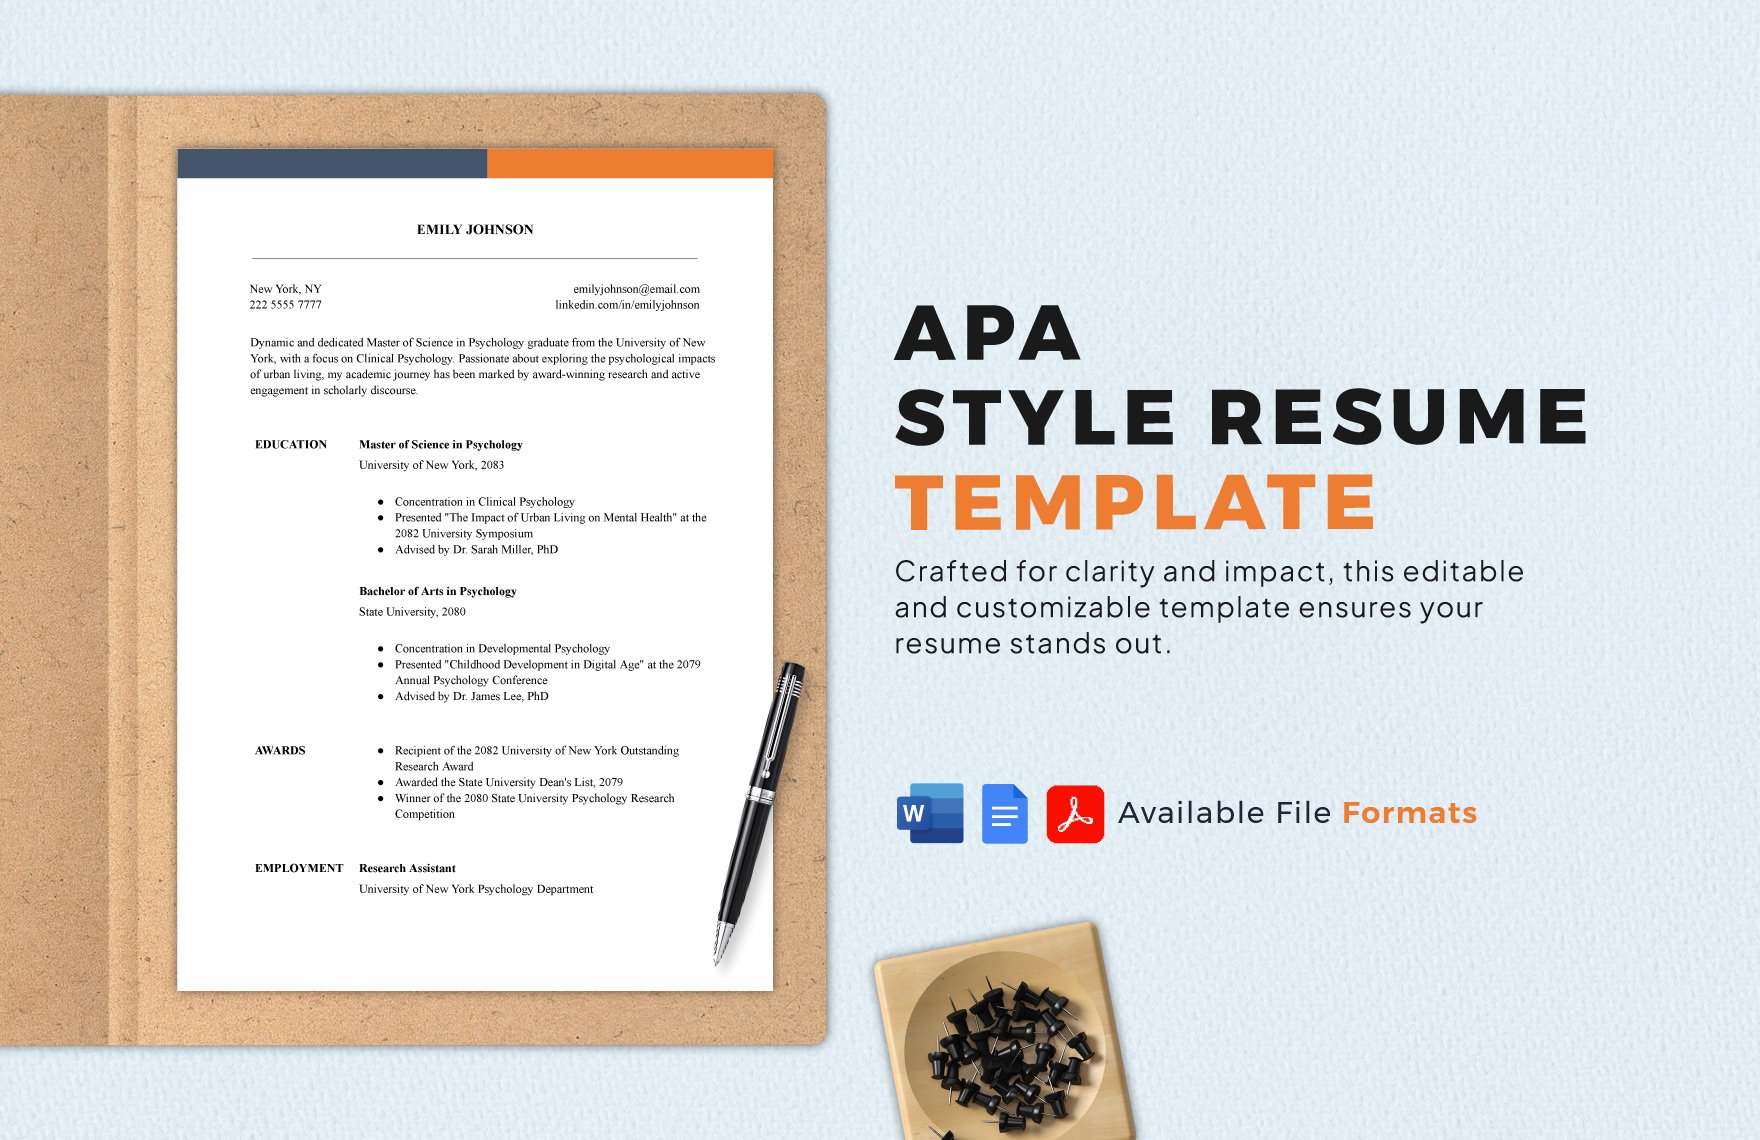 APA Style Resume Template